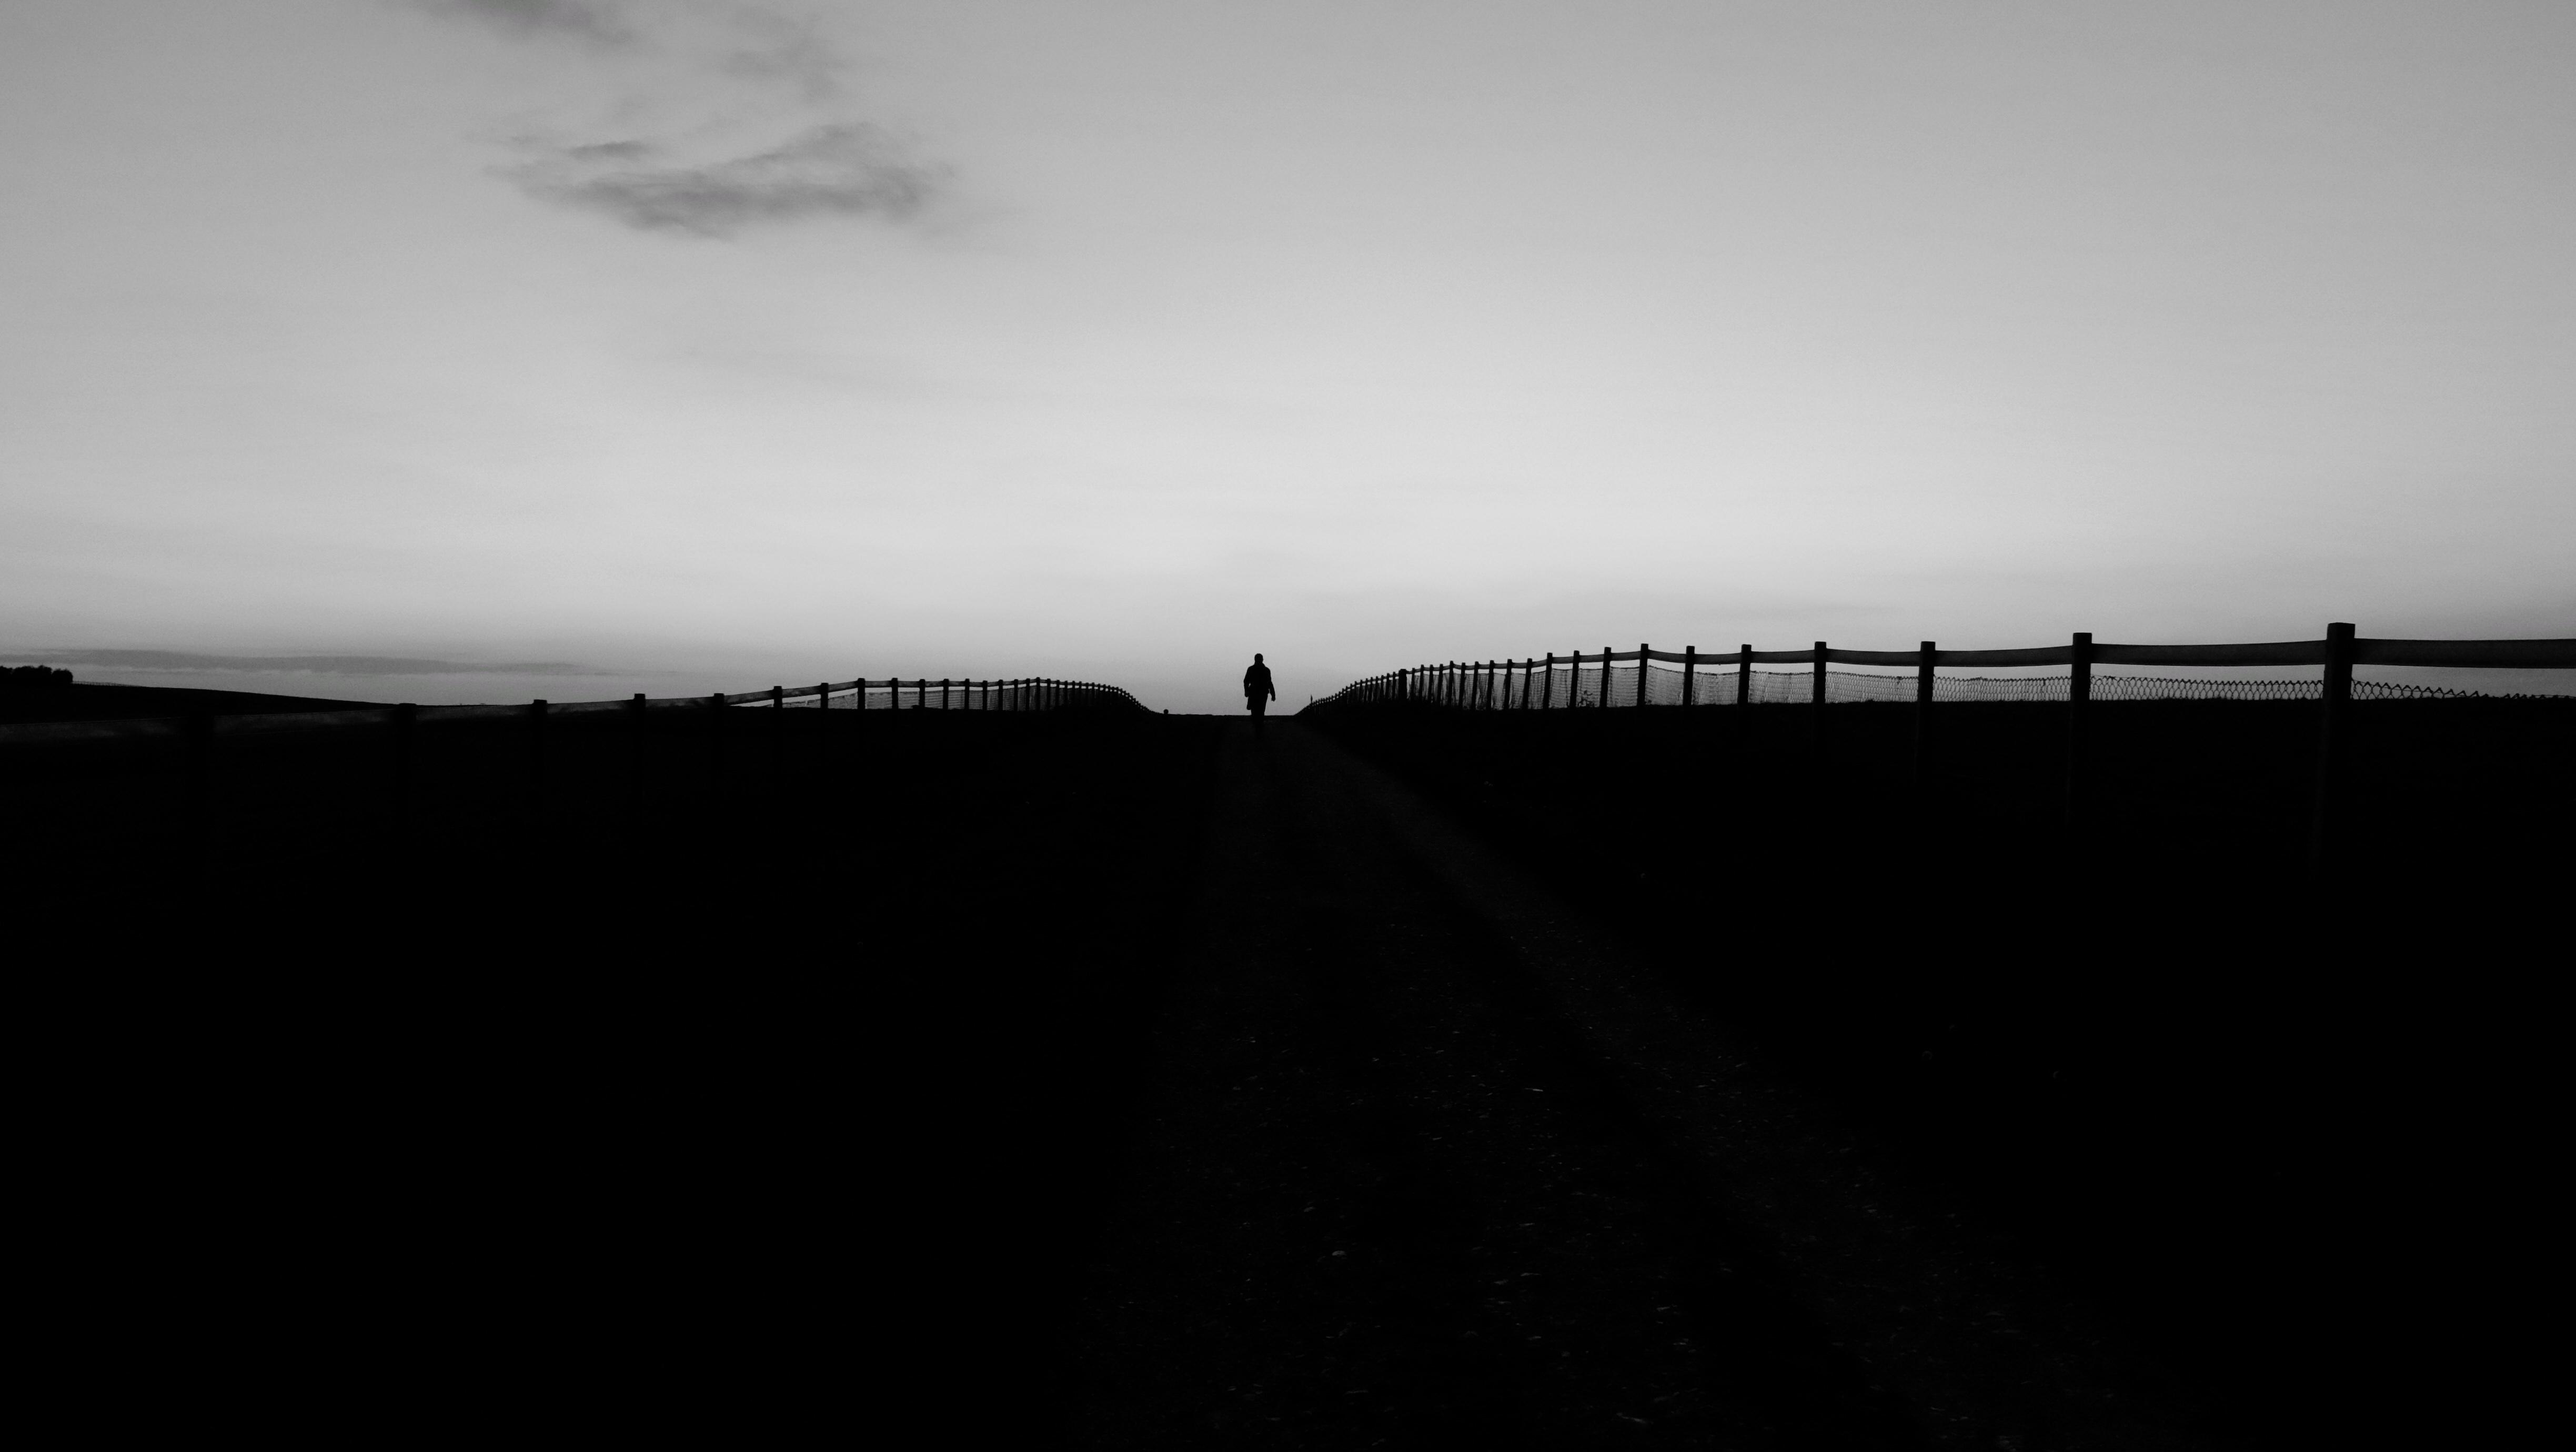 General 4896x2760 bridge people alone dark outdoors fence walking silhouette monochrome